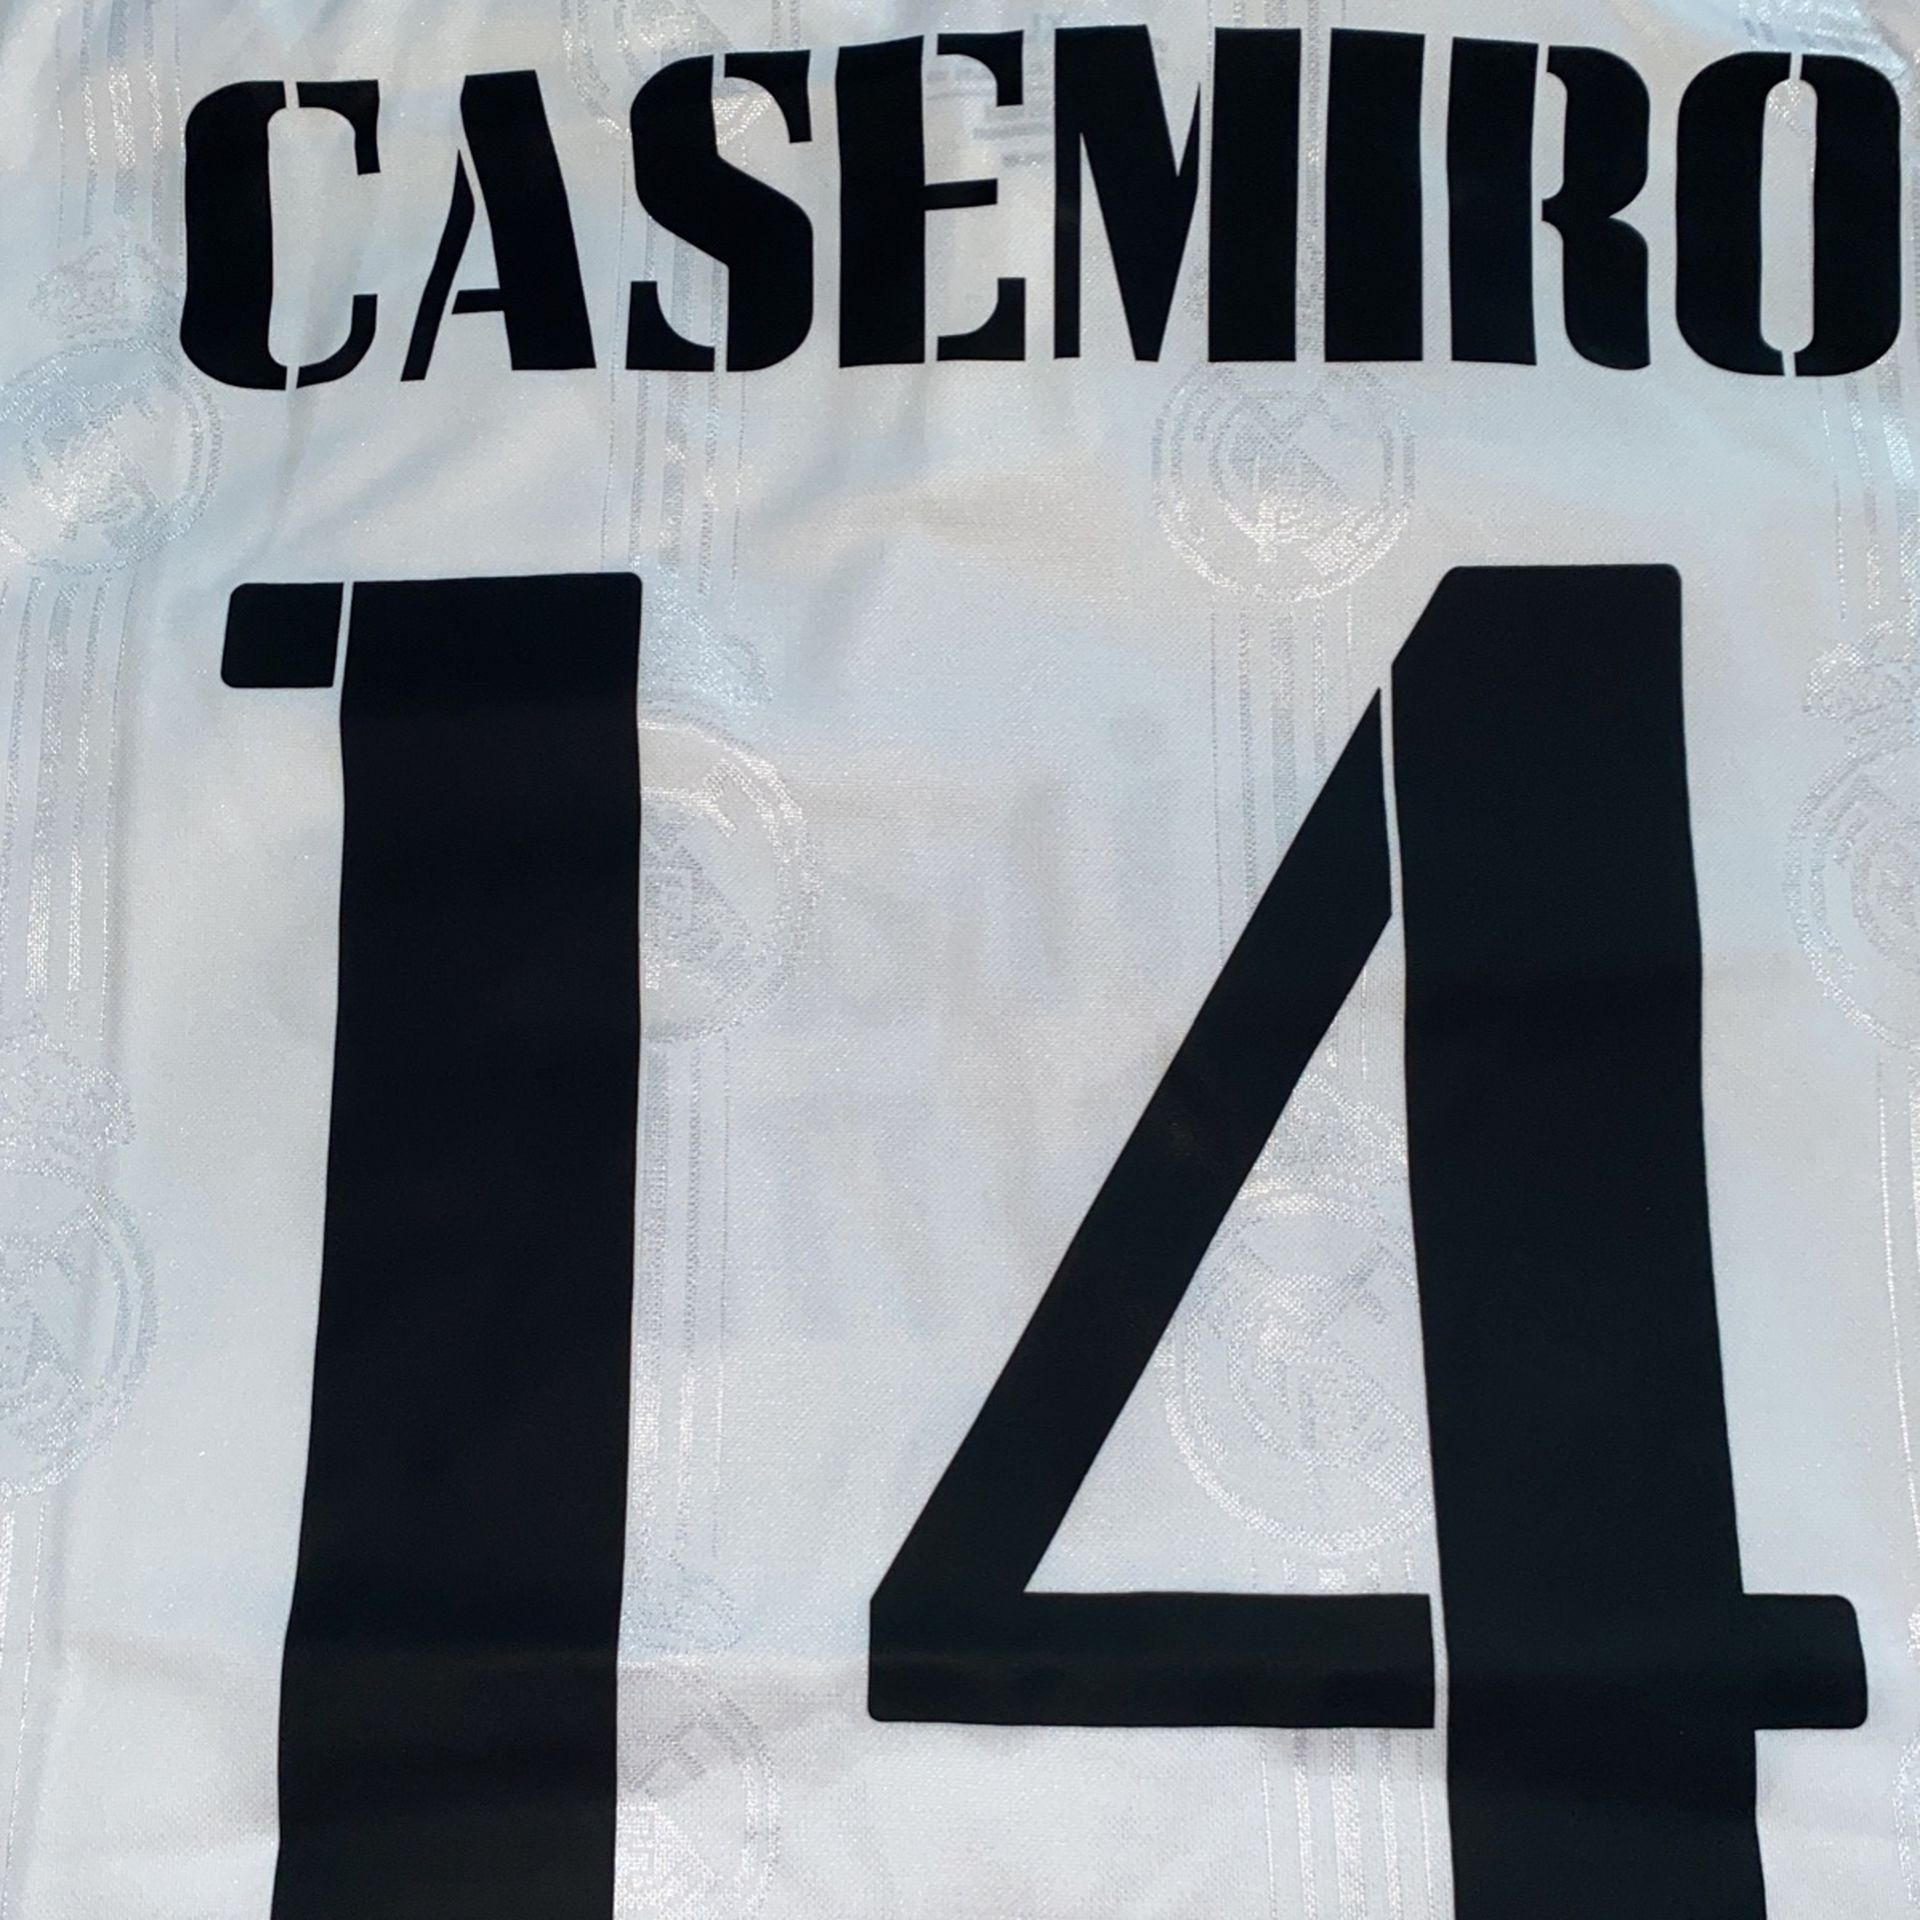 Real Madrid 22/23 Casemiro jersey